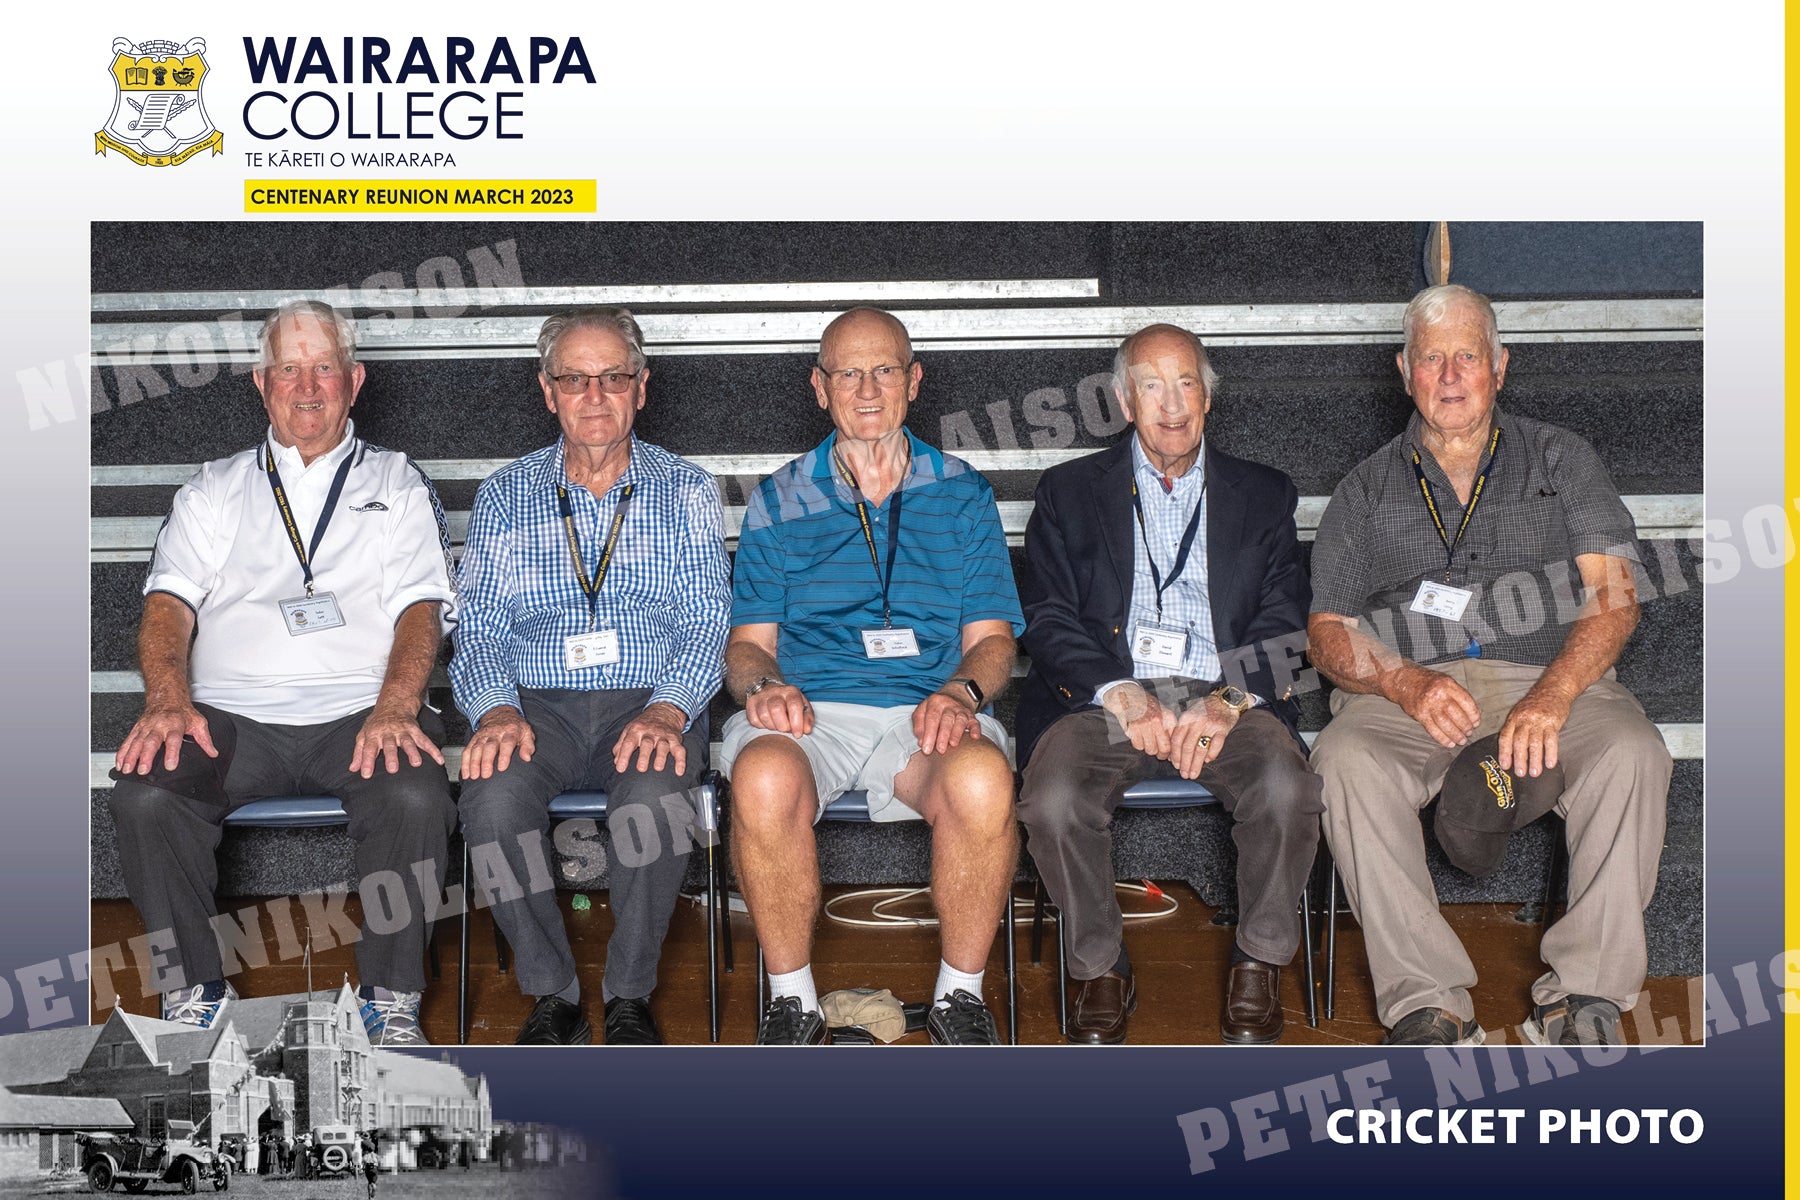 Cricket Photo - Wairarapa College Centenary